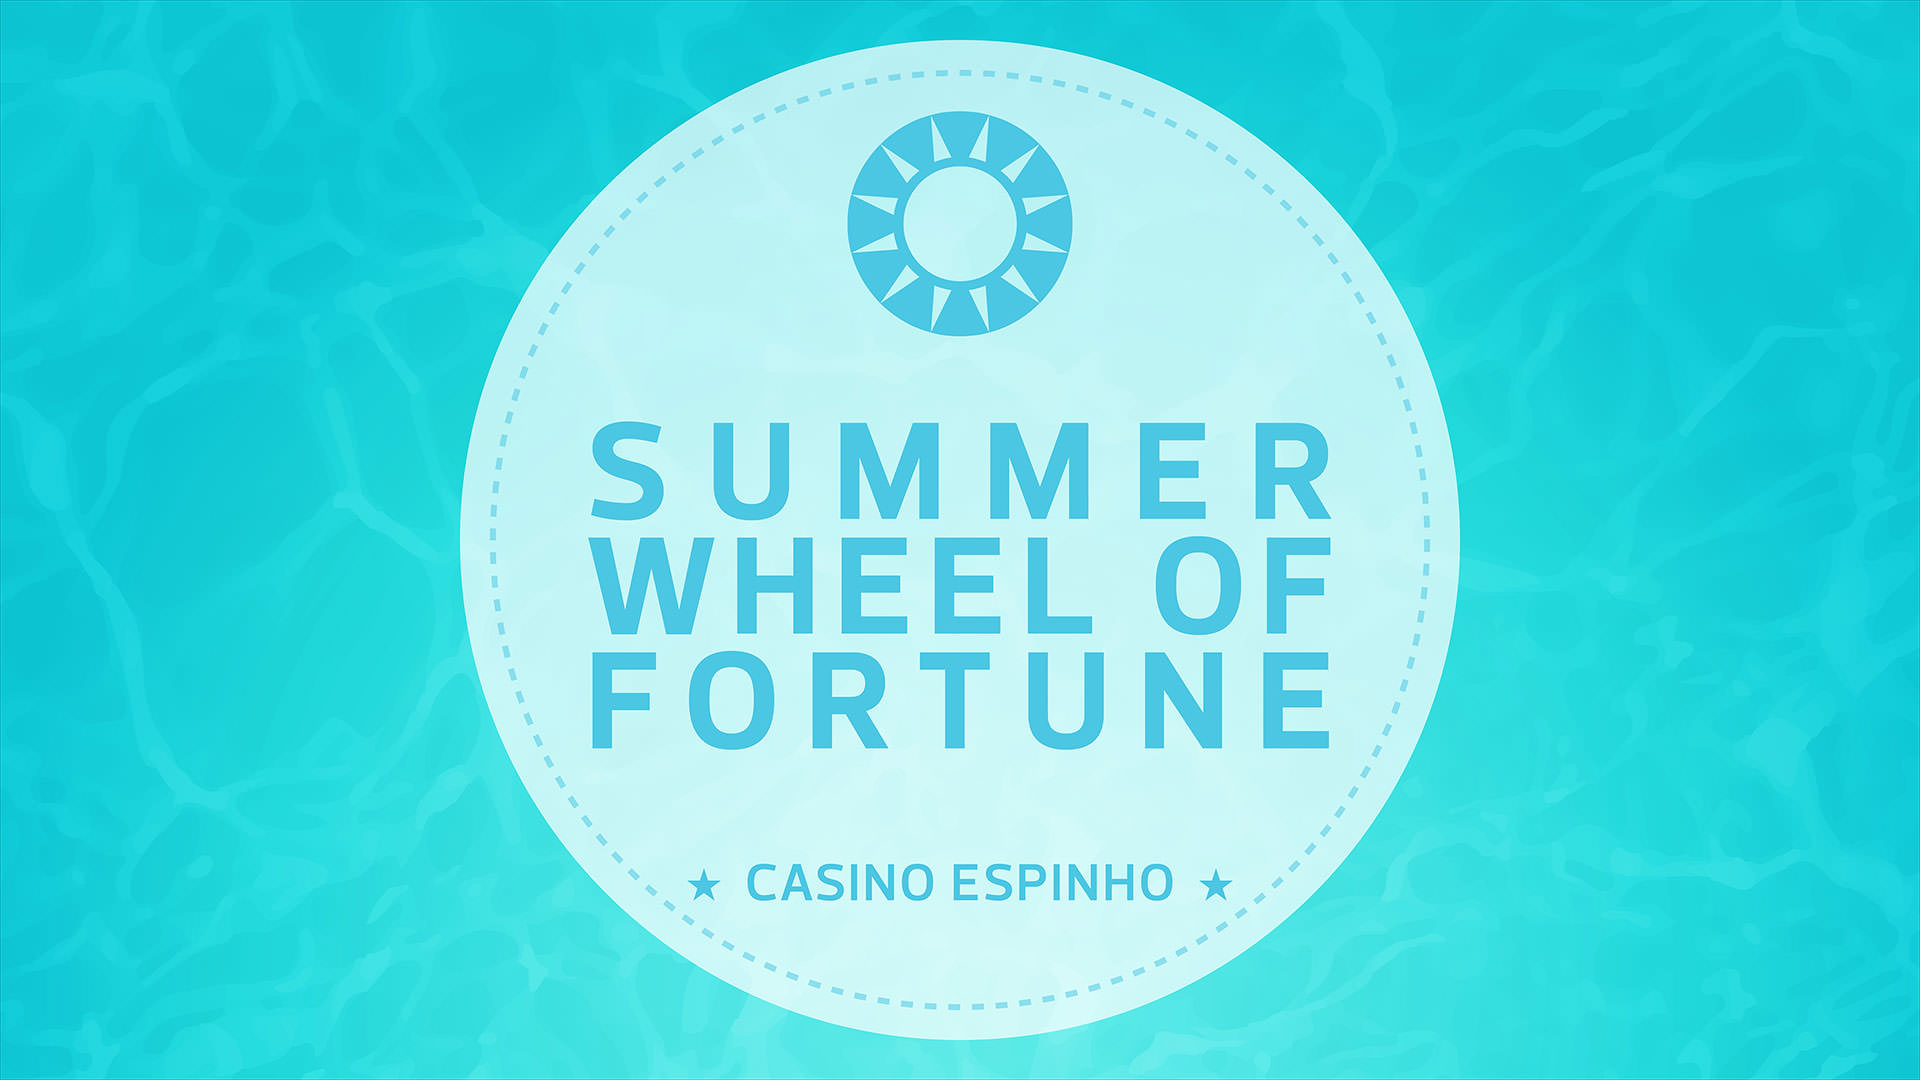 Summer Wheel of Fortune | Solverde Casinos & Hotéis1920 x 1080